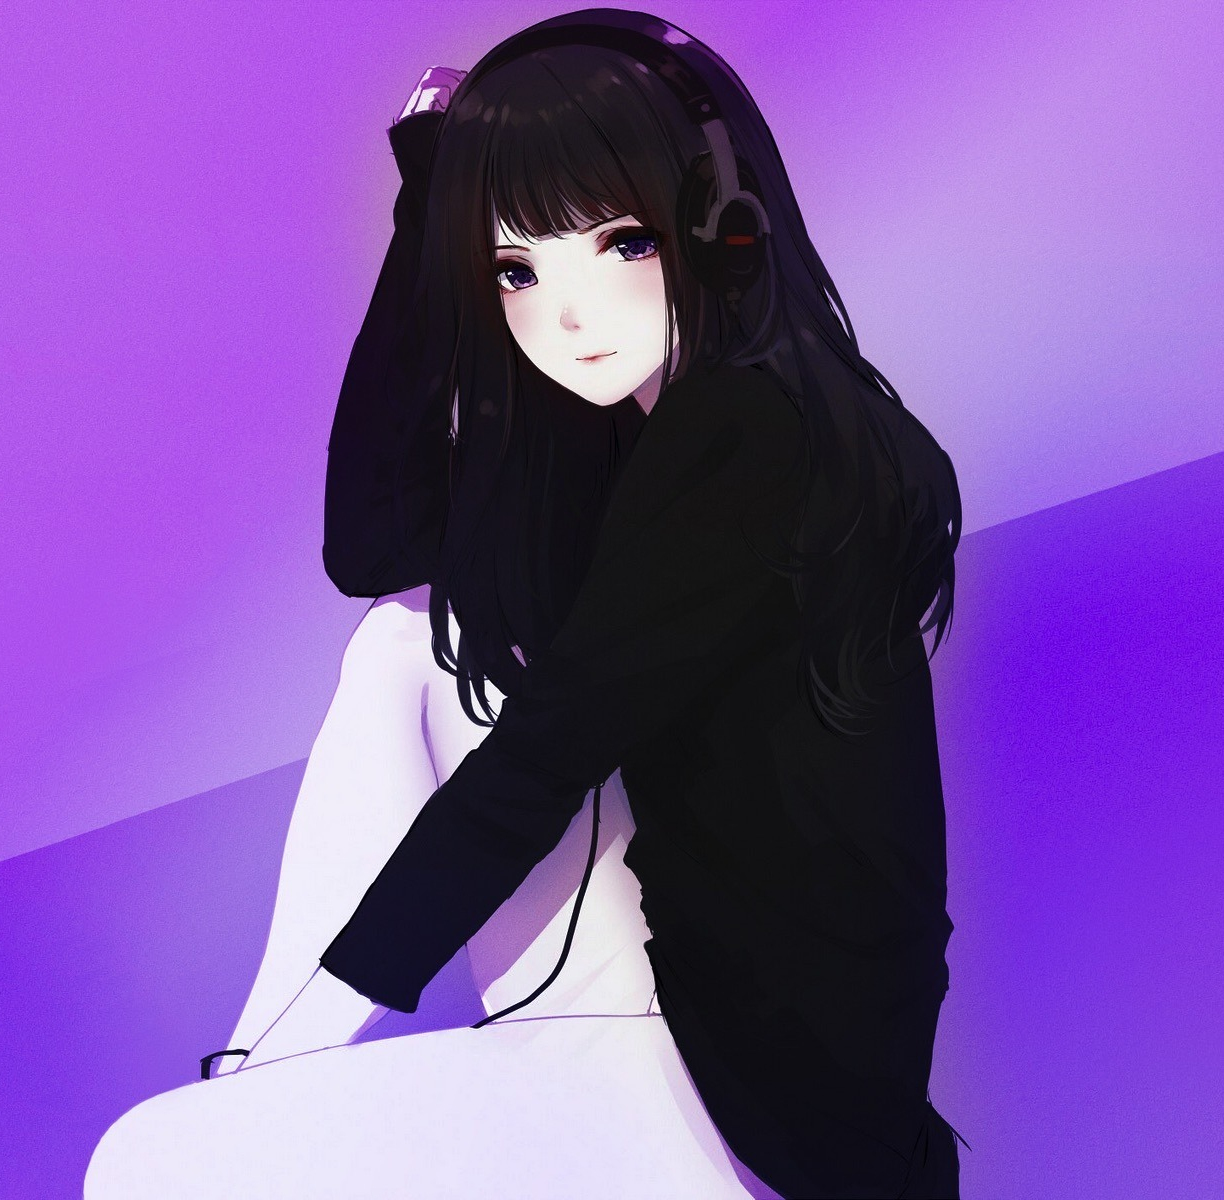 Wallpaper headphone, cute, anime girl, black hoodie desktop wallpaper, hd  image, picture, background, c095a4 | wallpapersmug